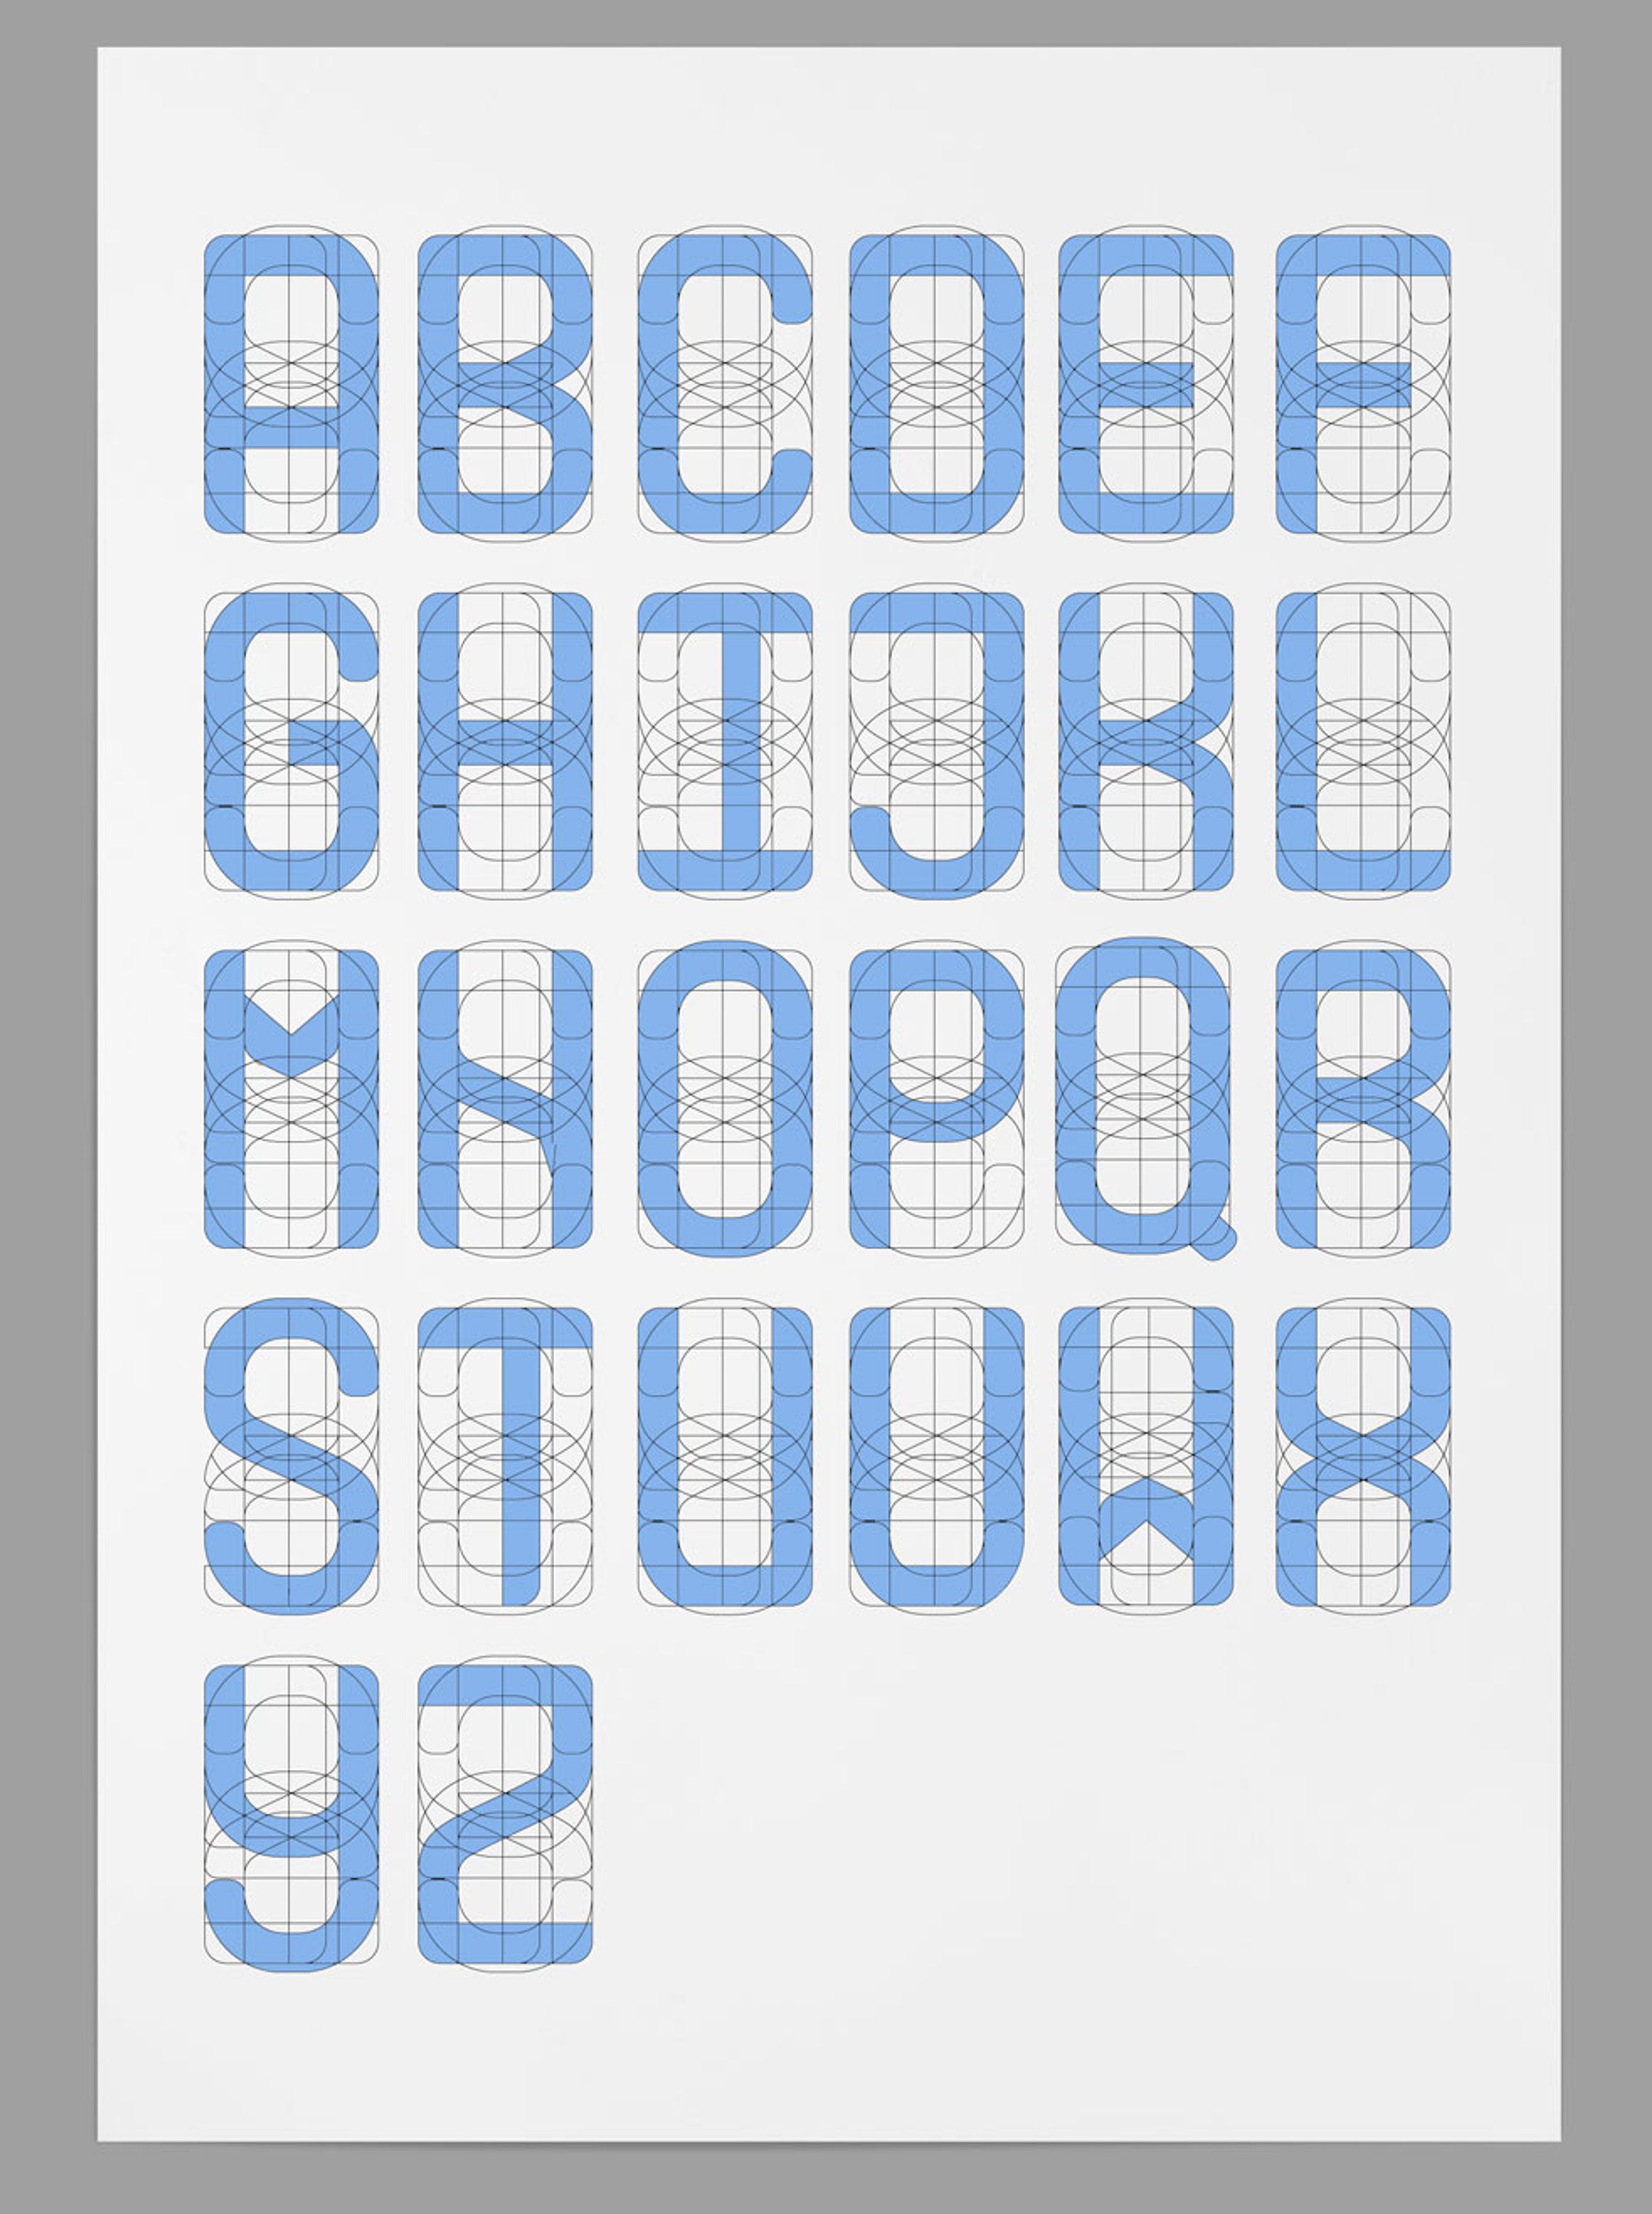 Type design for Suunto, in collaboration with Akiem Helming from type studio “Underware”